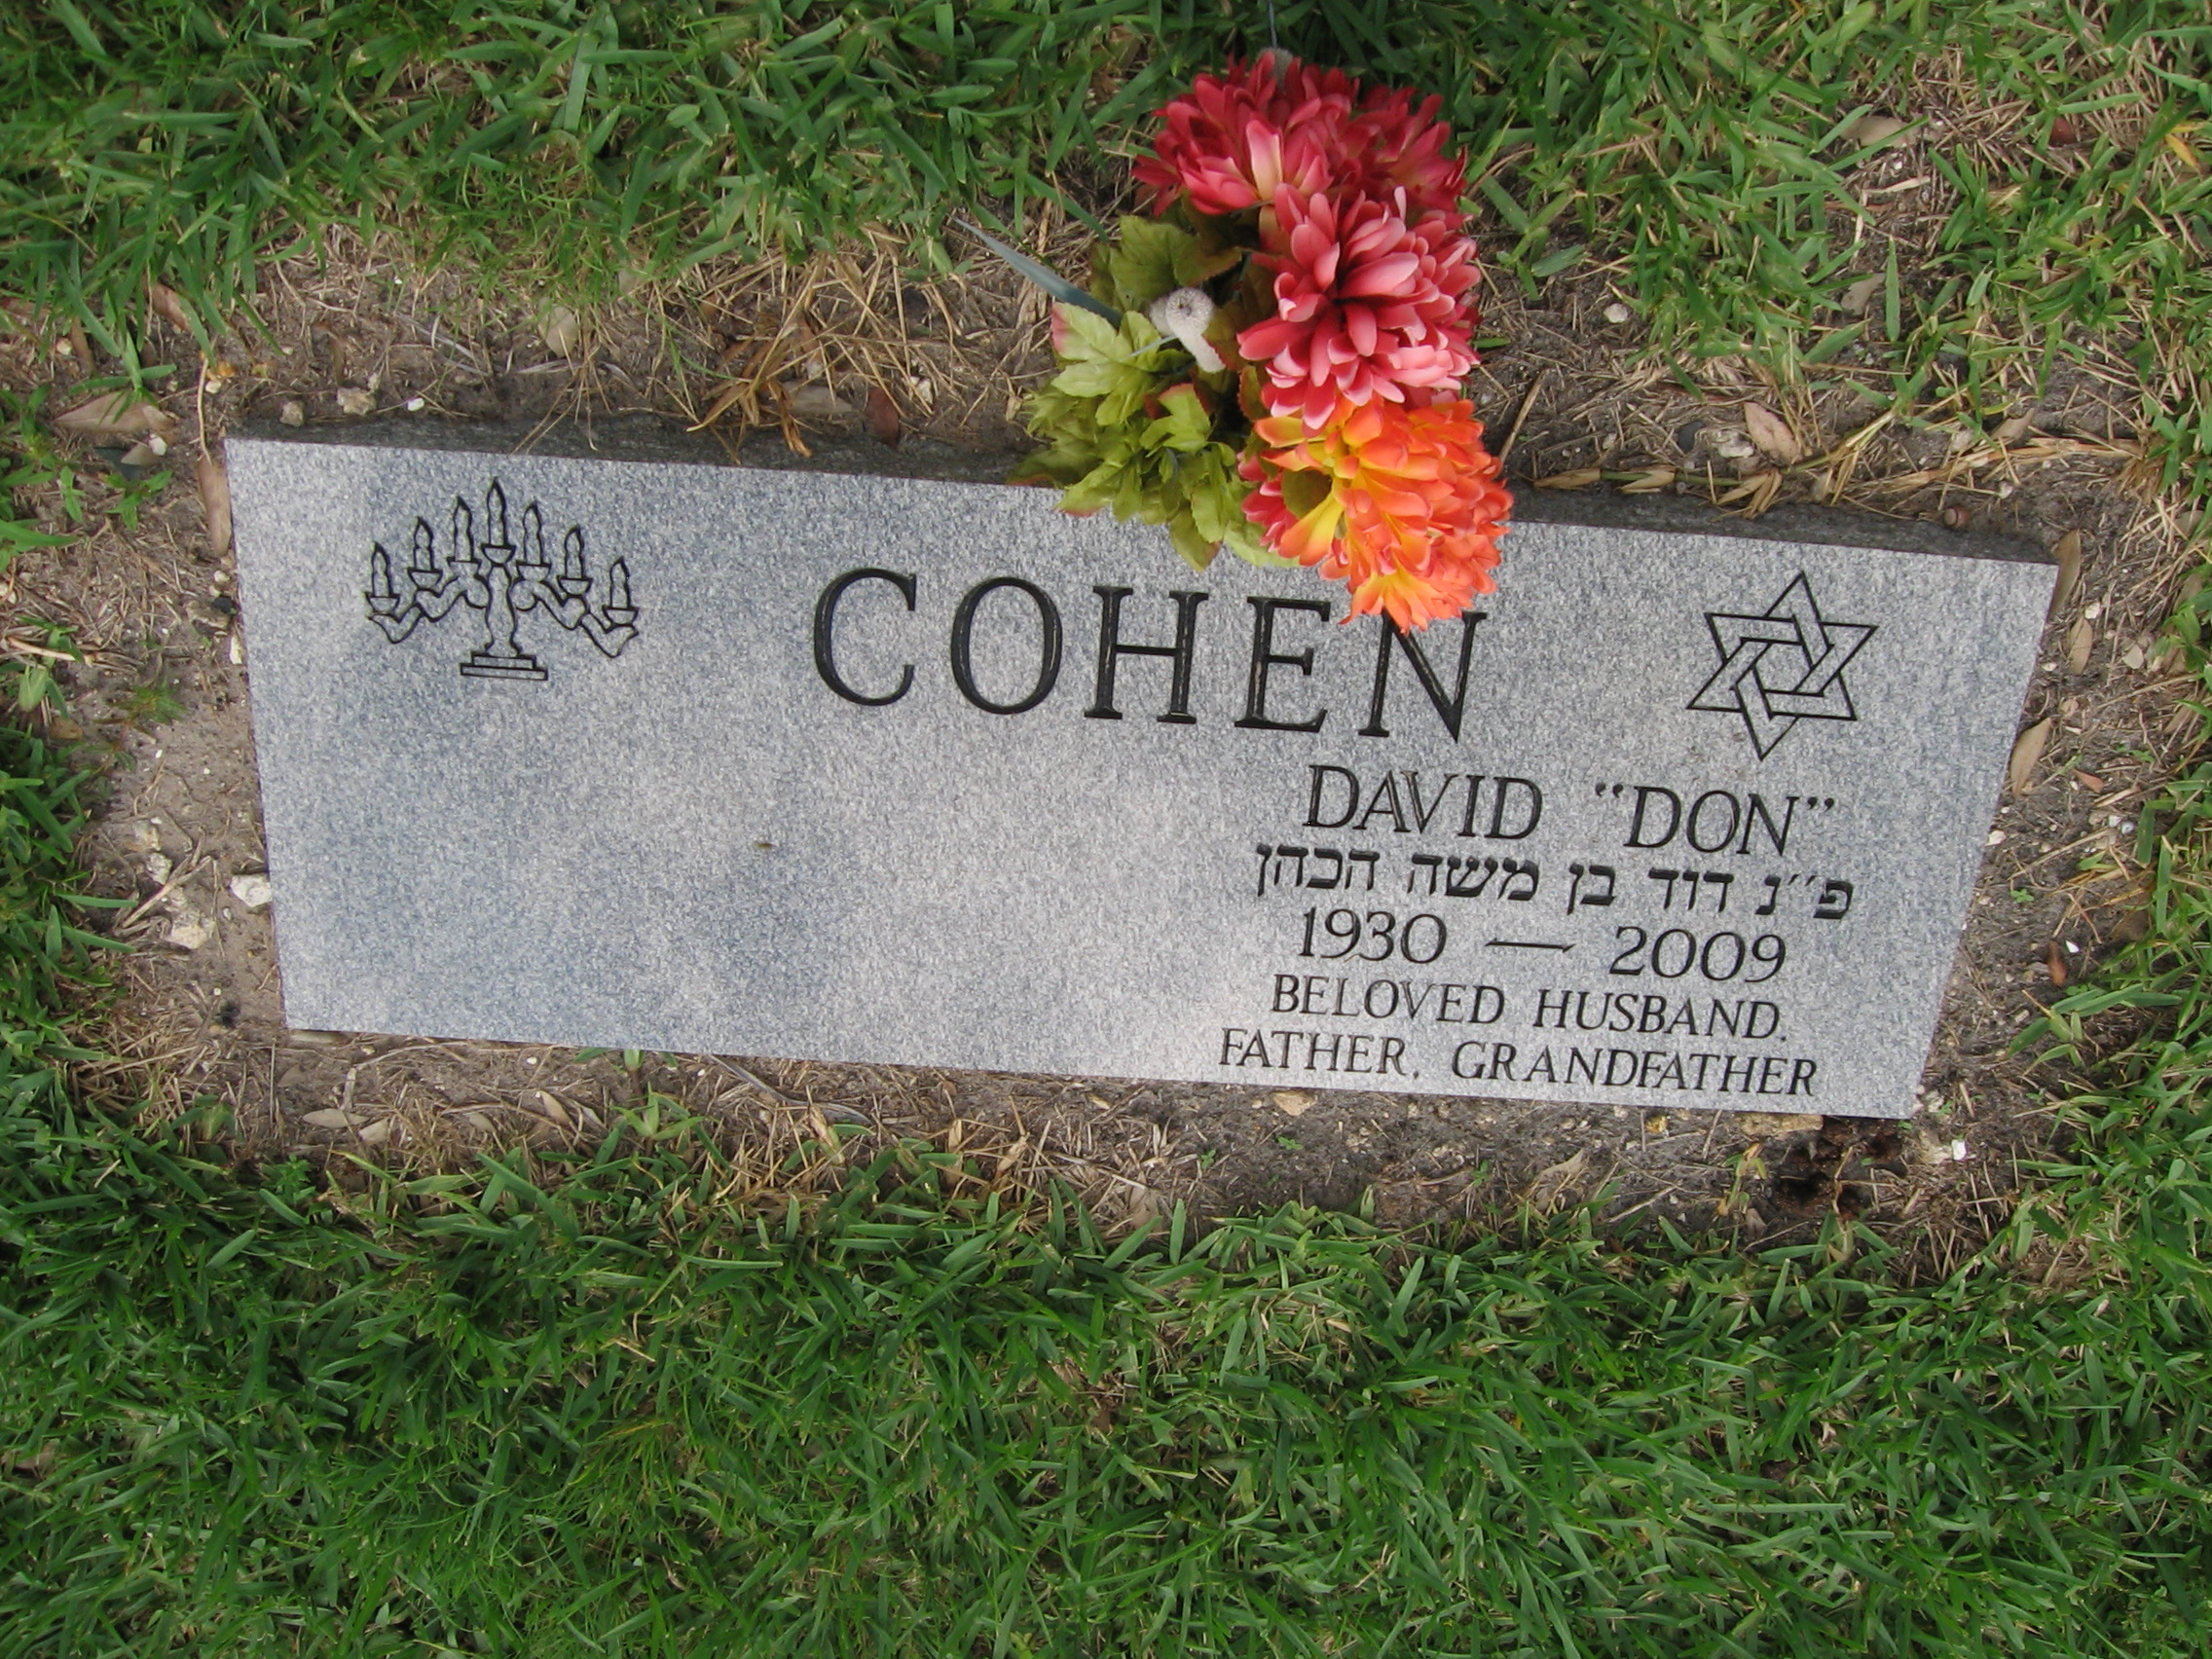 David "Don" Cohen